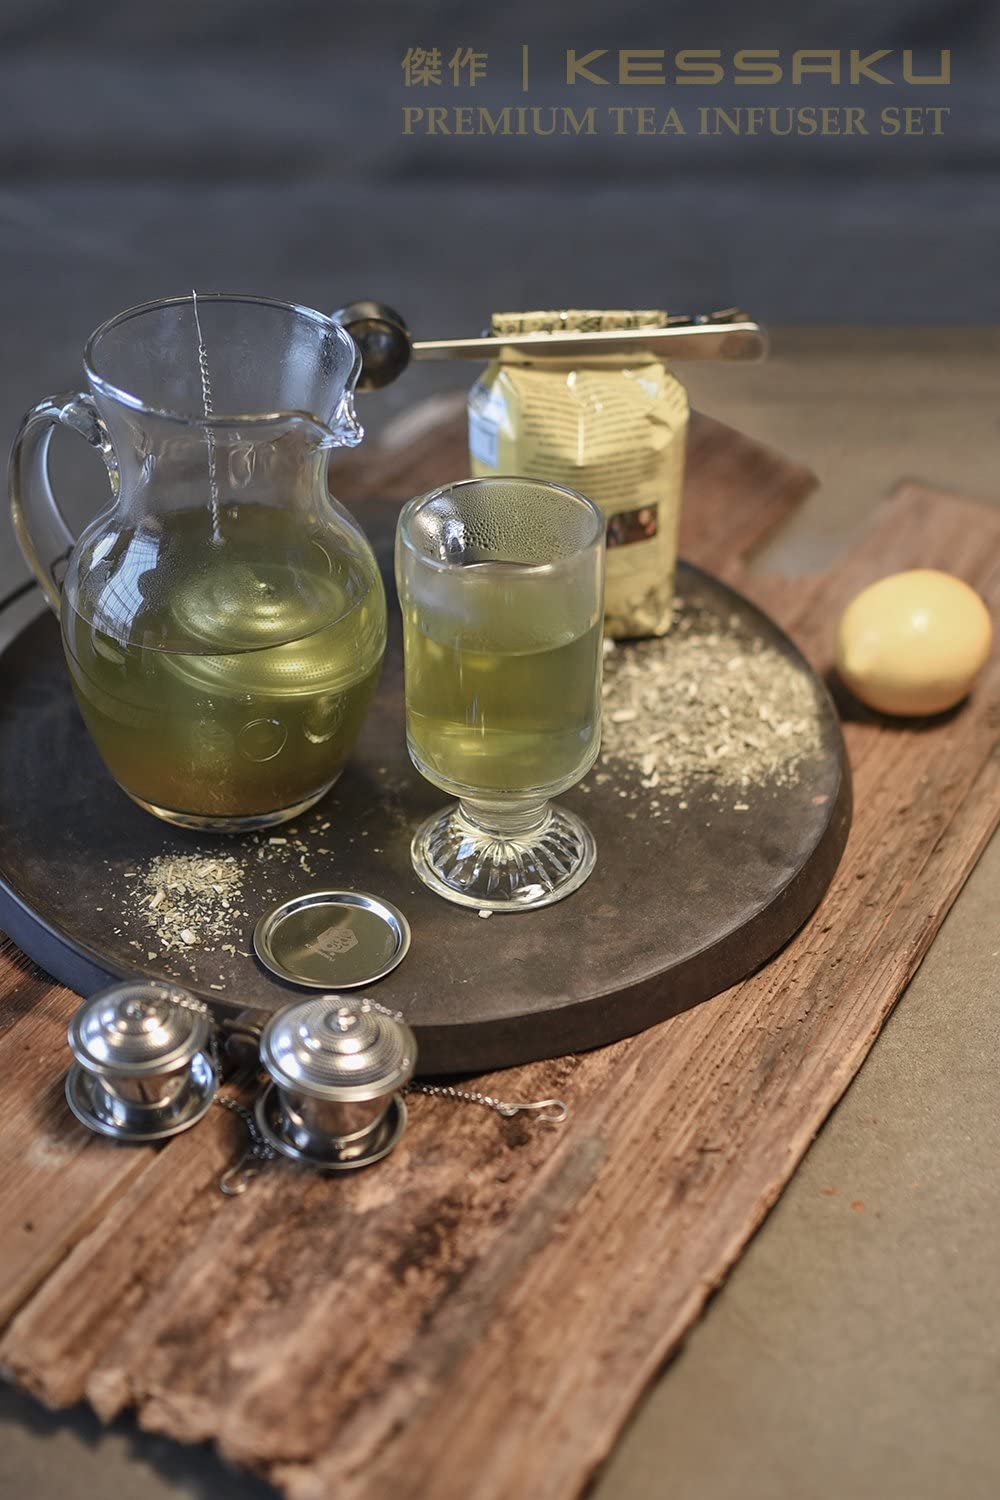 Light green tea on a serving tray with the Kessaku Premium Tea Infuser Set